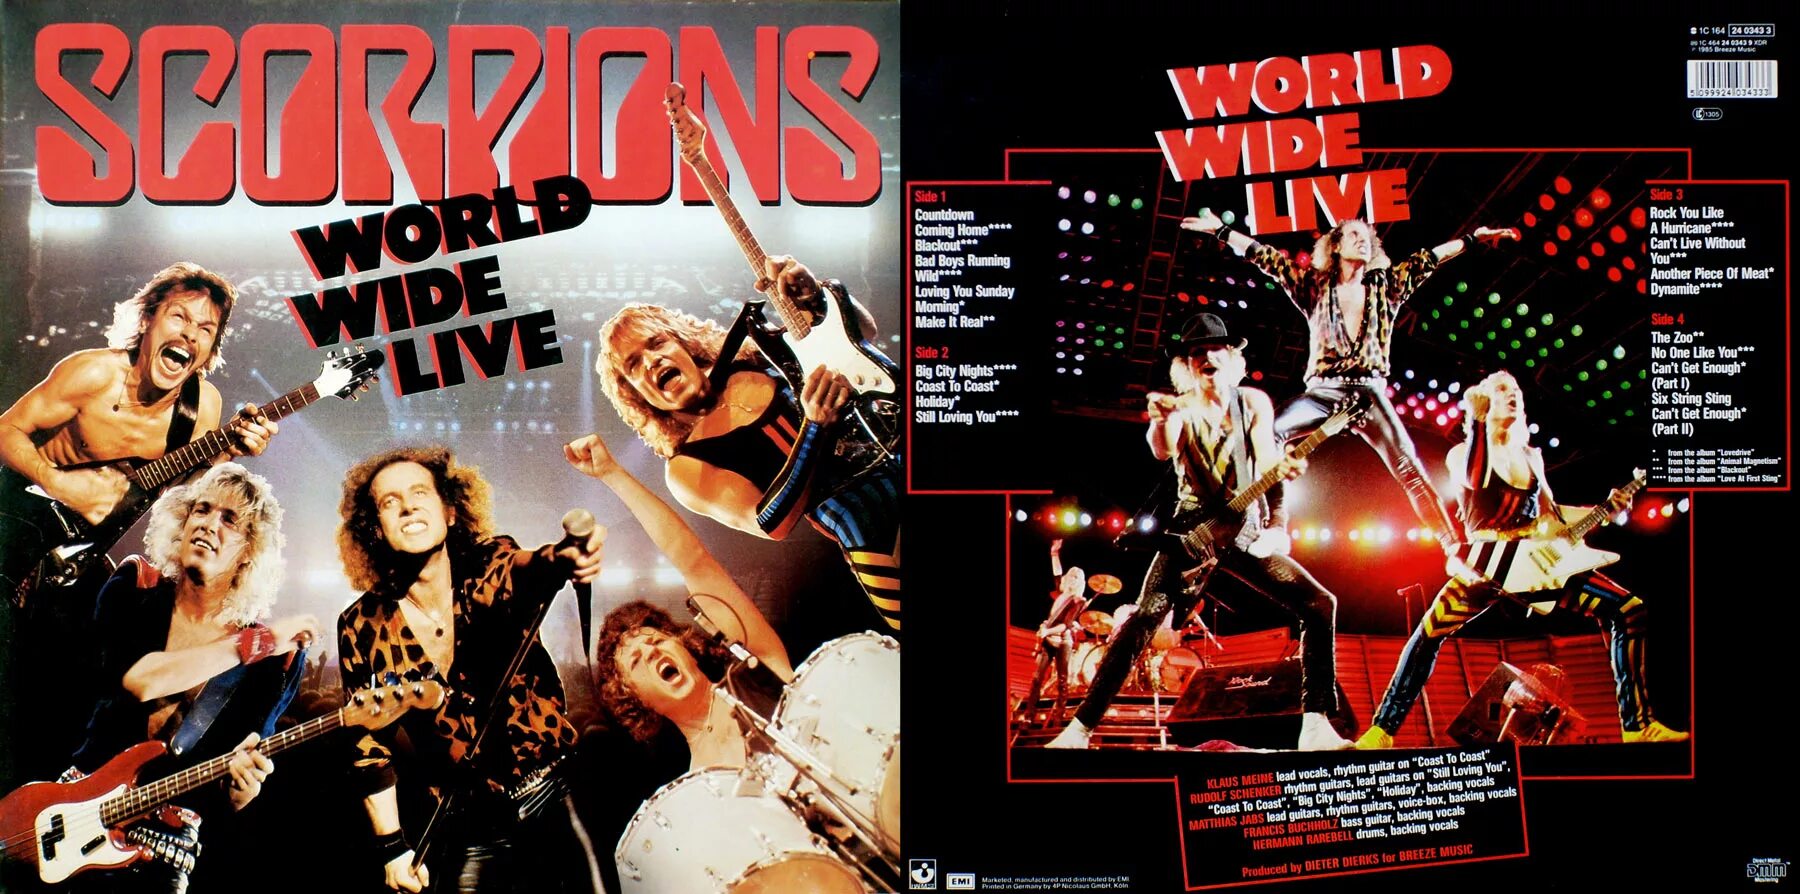 Scorpions world. Scorpions 1985 World wide Live Live. Группа Scorpions 1985. Группа Scorpions 1986. Scorpions 1985 обложка.